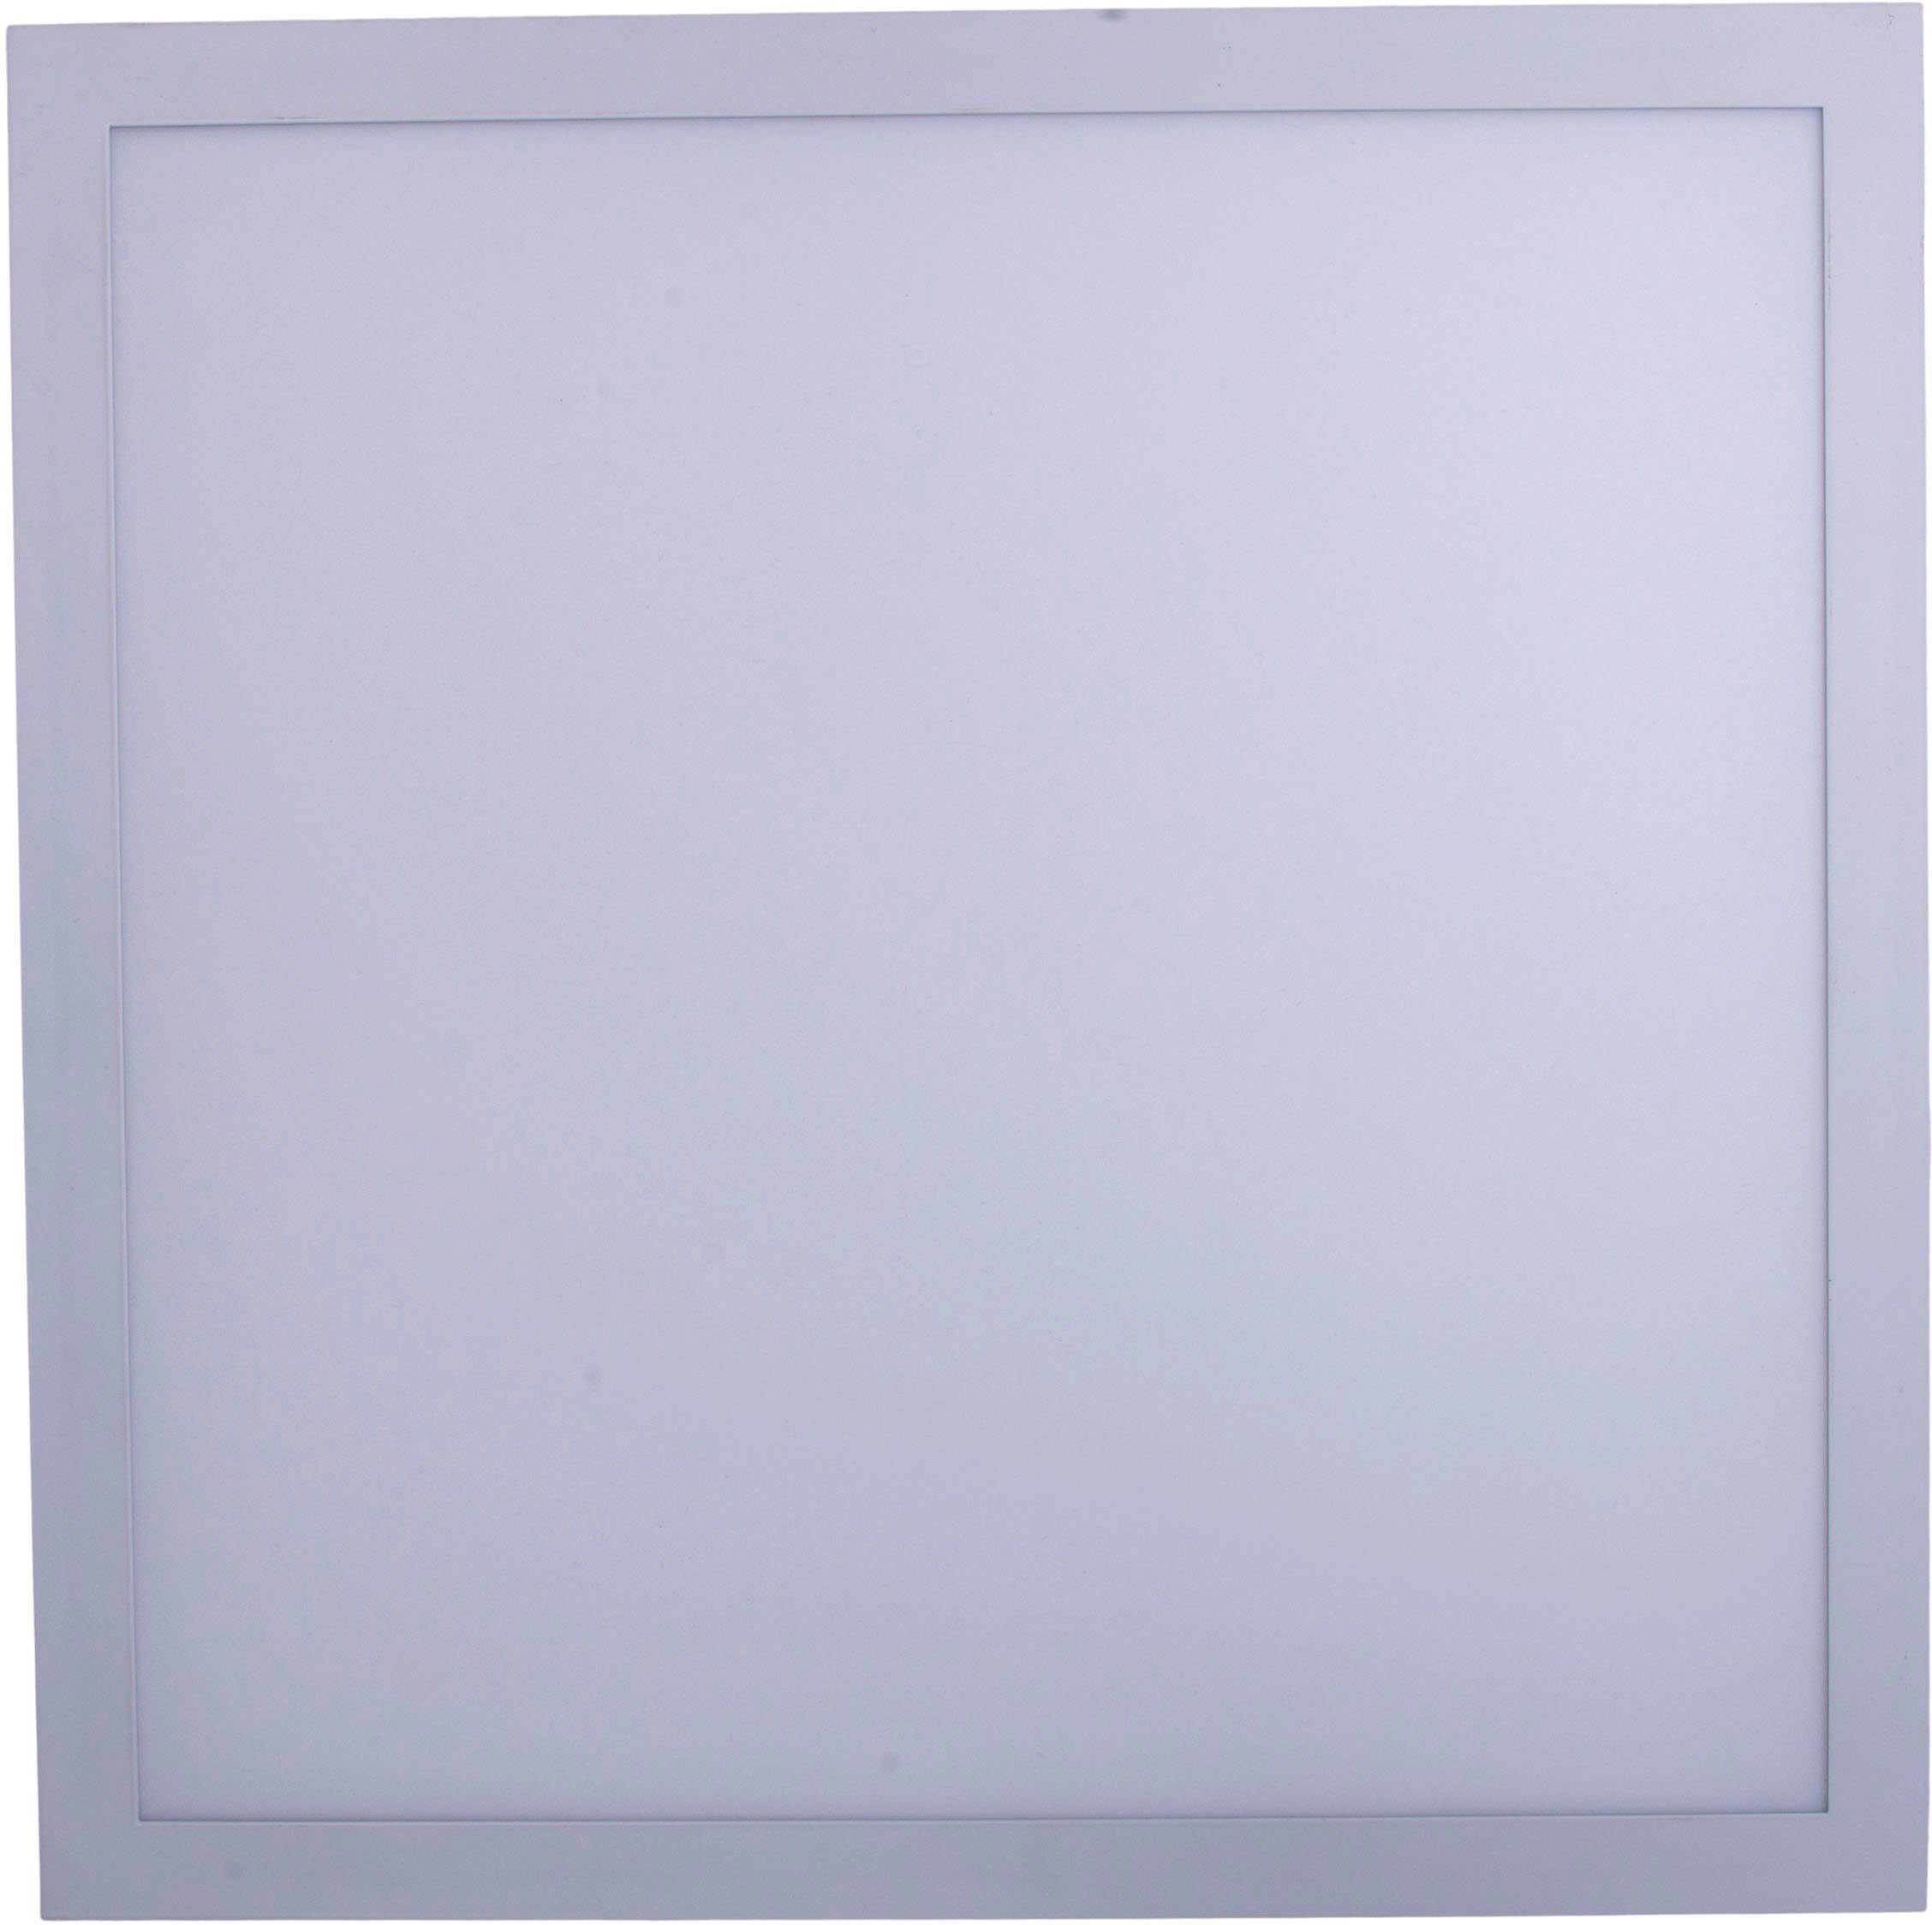 näve LED Panel Nicola, Lichtfarbe LED weiß 120 fest 45x45cm, neutralweiß H: 6cm, Aufbaupanel LED, Neutralweiß, integriert